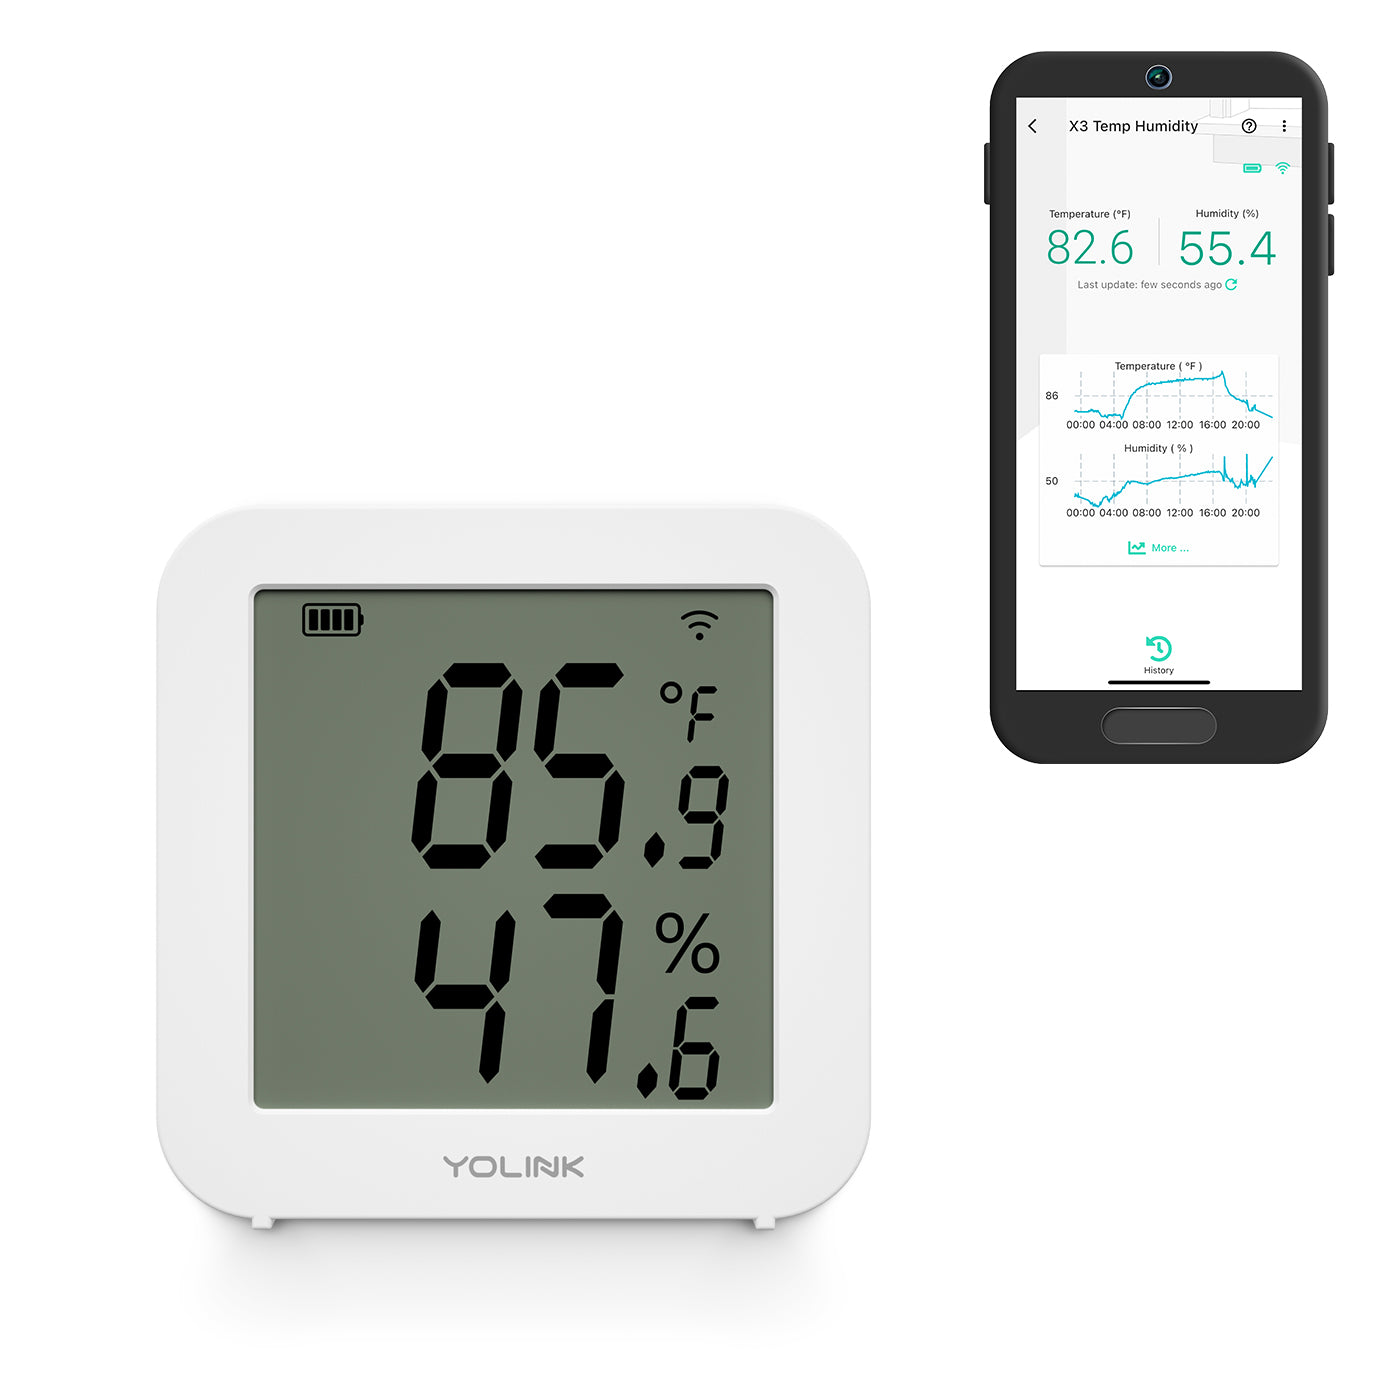 Smart Life (Model TH16) WIFI Thermometer Hygrometer Temperature Humidity  Sensor